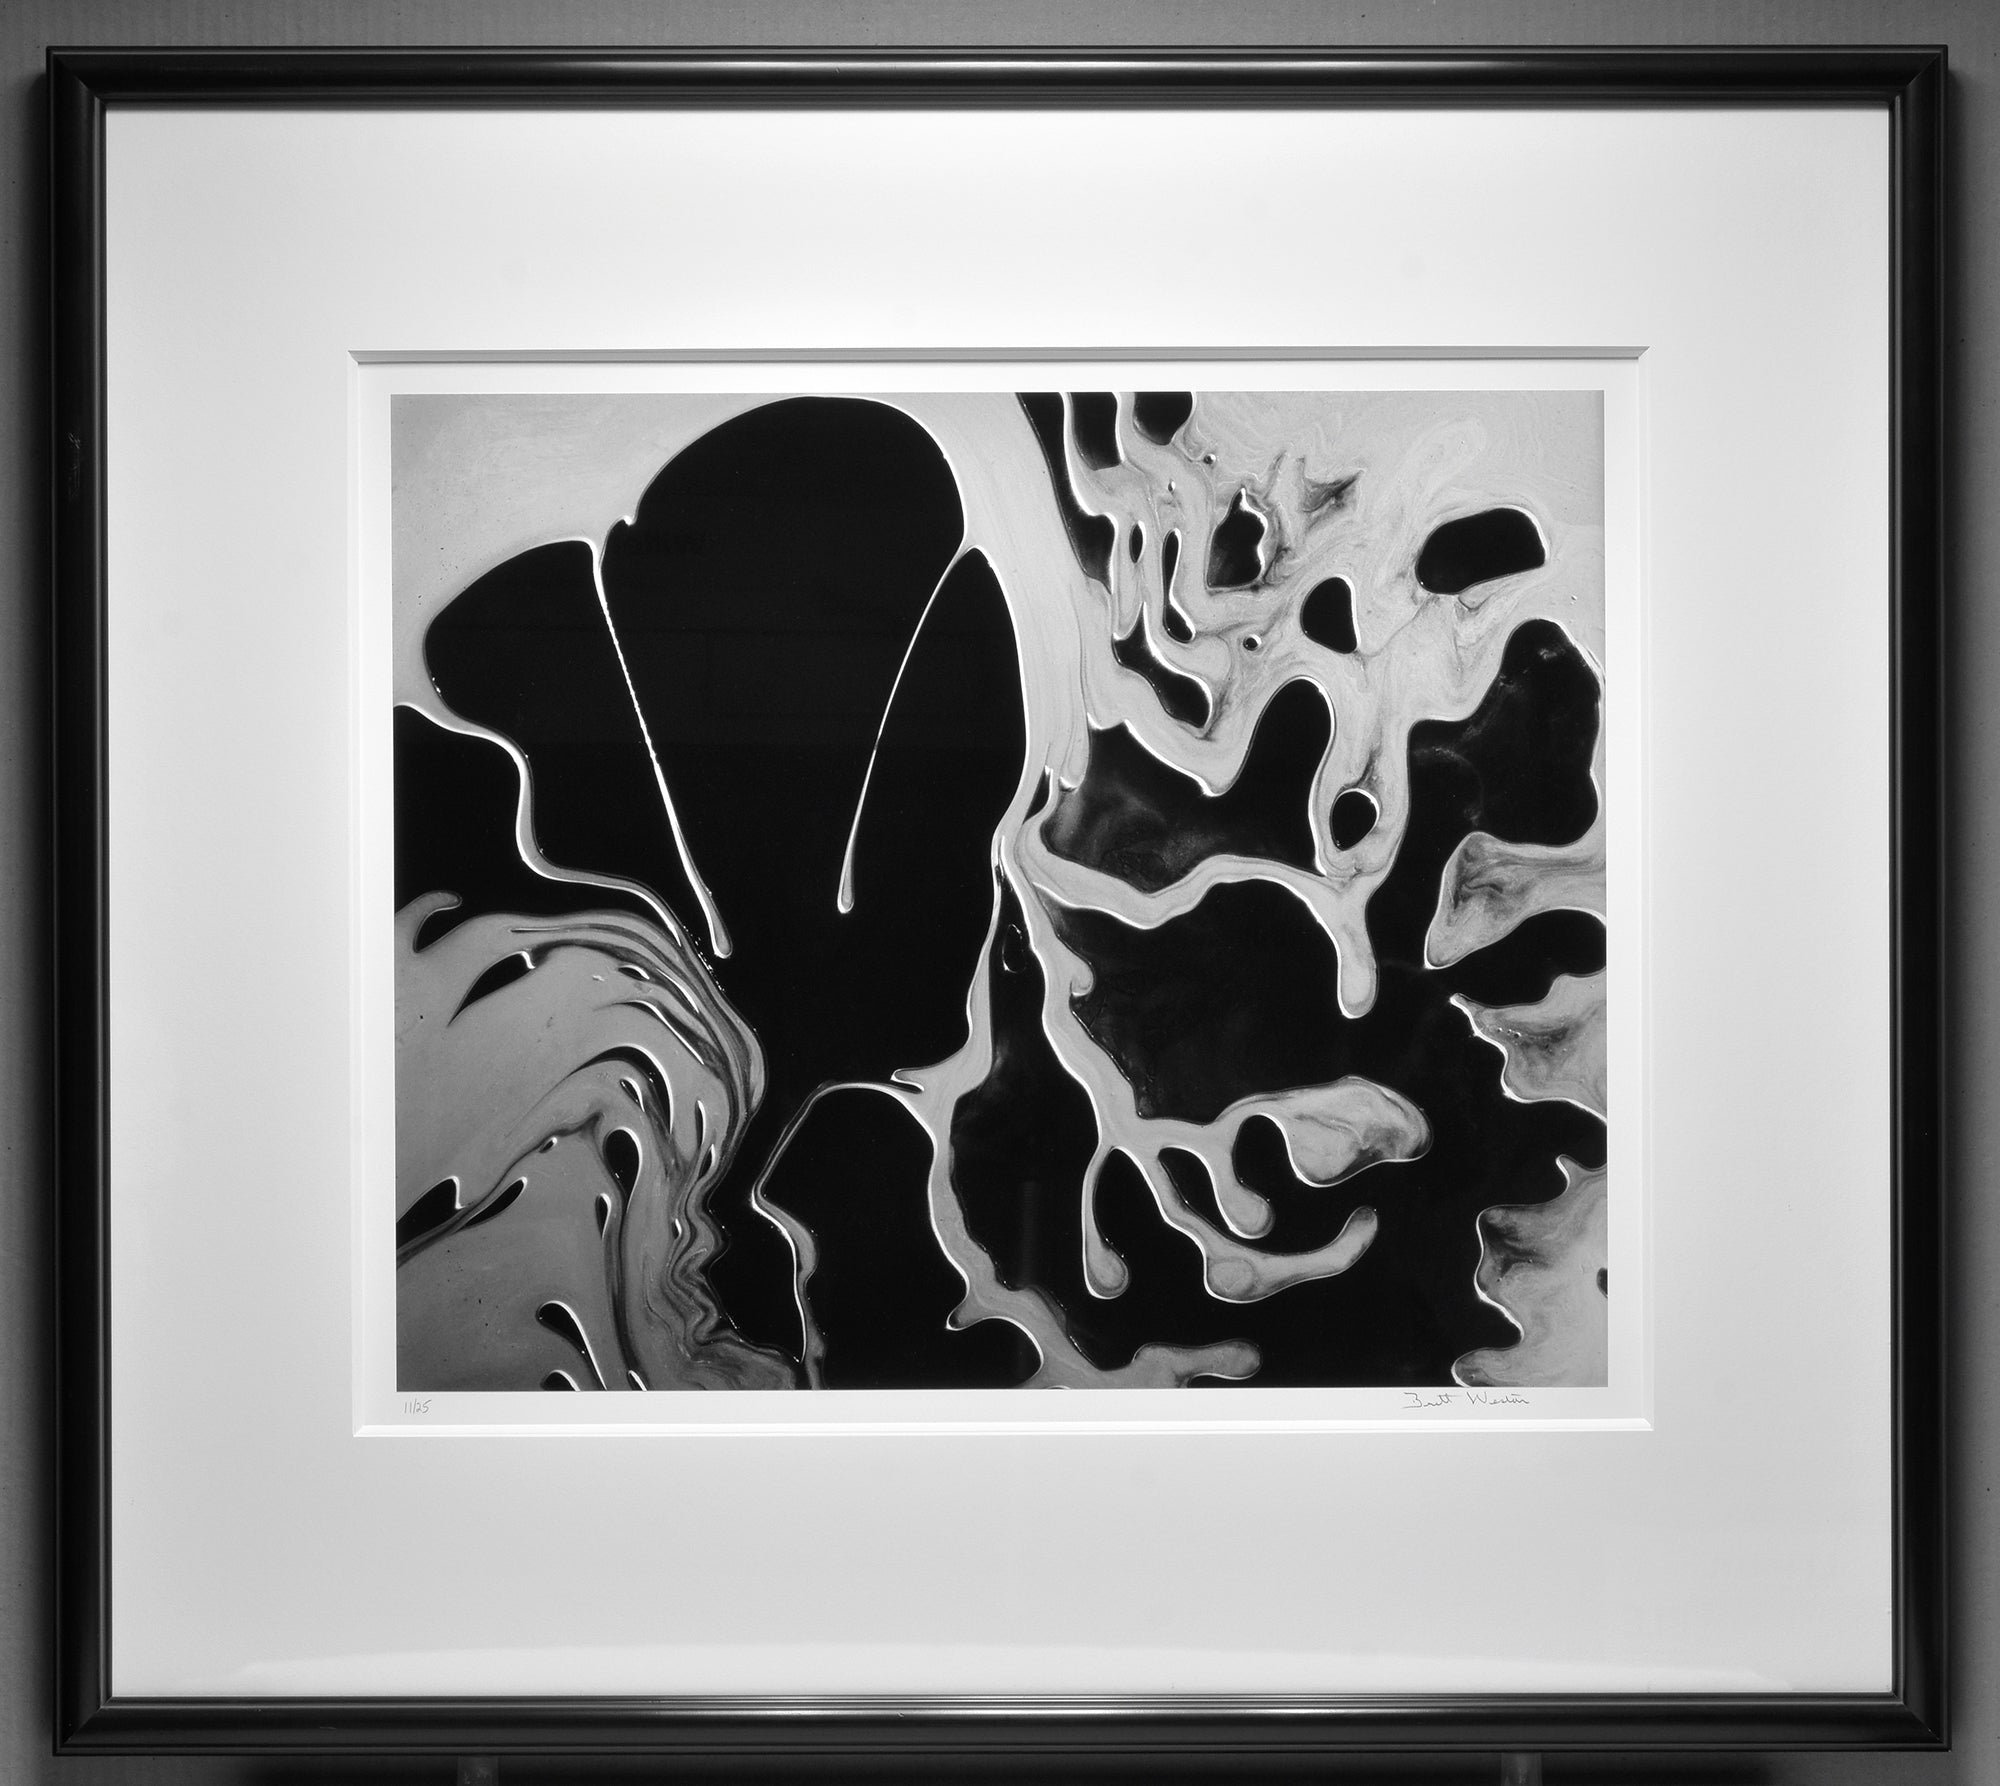 Brett Weston - Wet Paint Abstraction, 1955 - 19"x23" Photograph